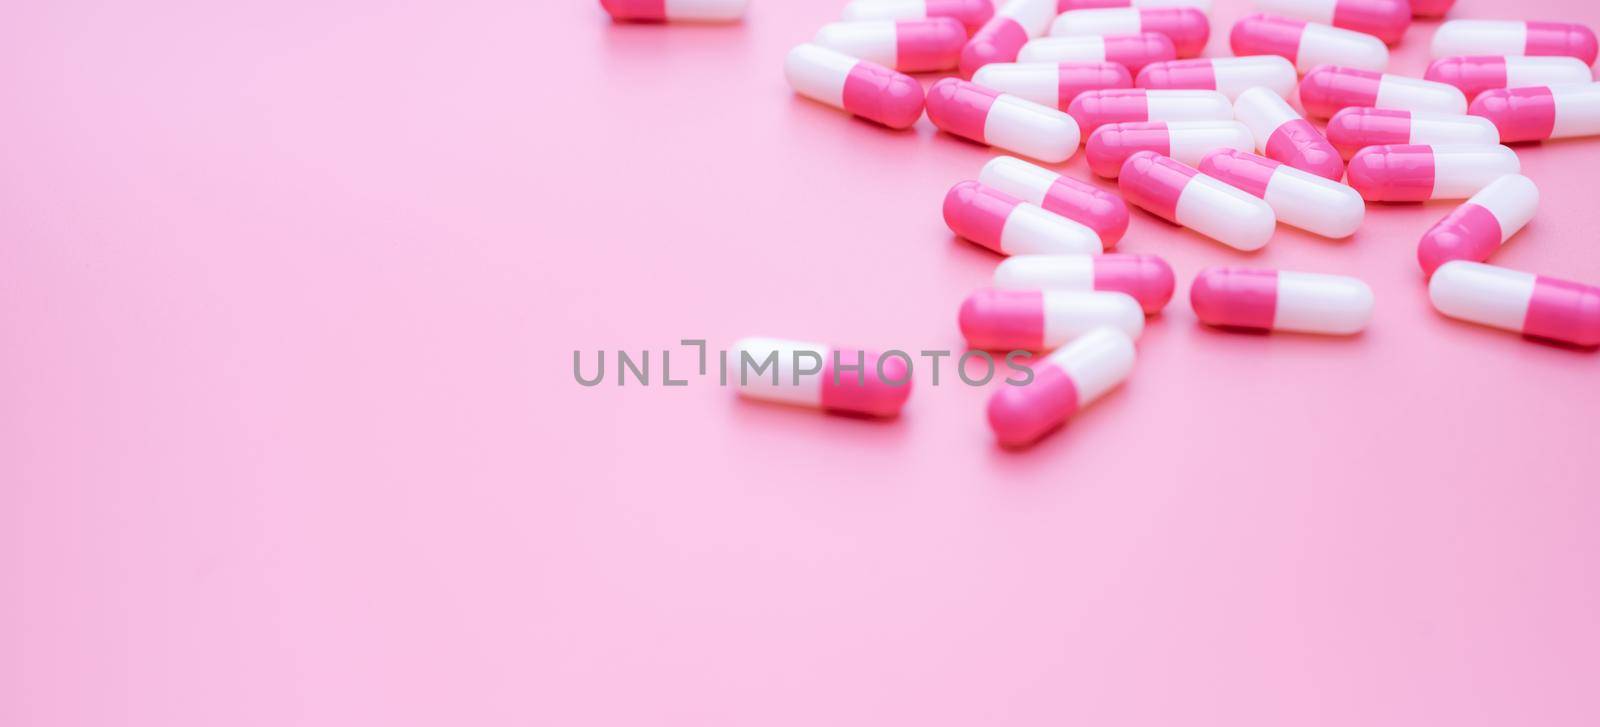 Pink-white antibiotic capsule pills on pink background. Antibiotic drug resistance. Capsule pills spread on pink background. Medication use in hospital. Prescription drugs. Antibiotic drug smart use. by Fahroni